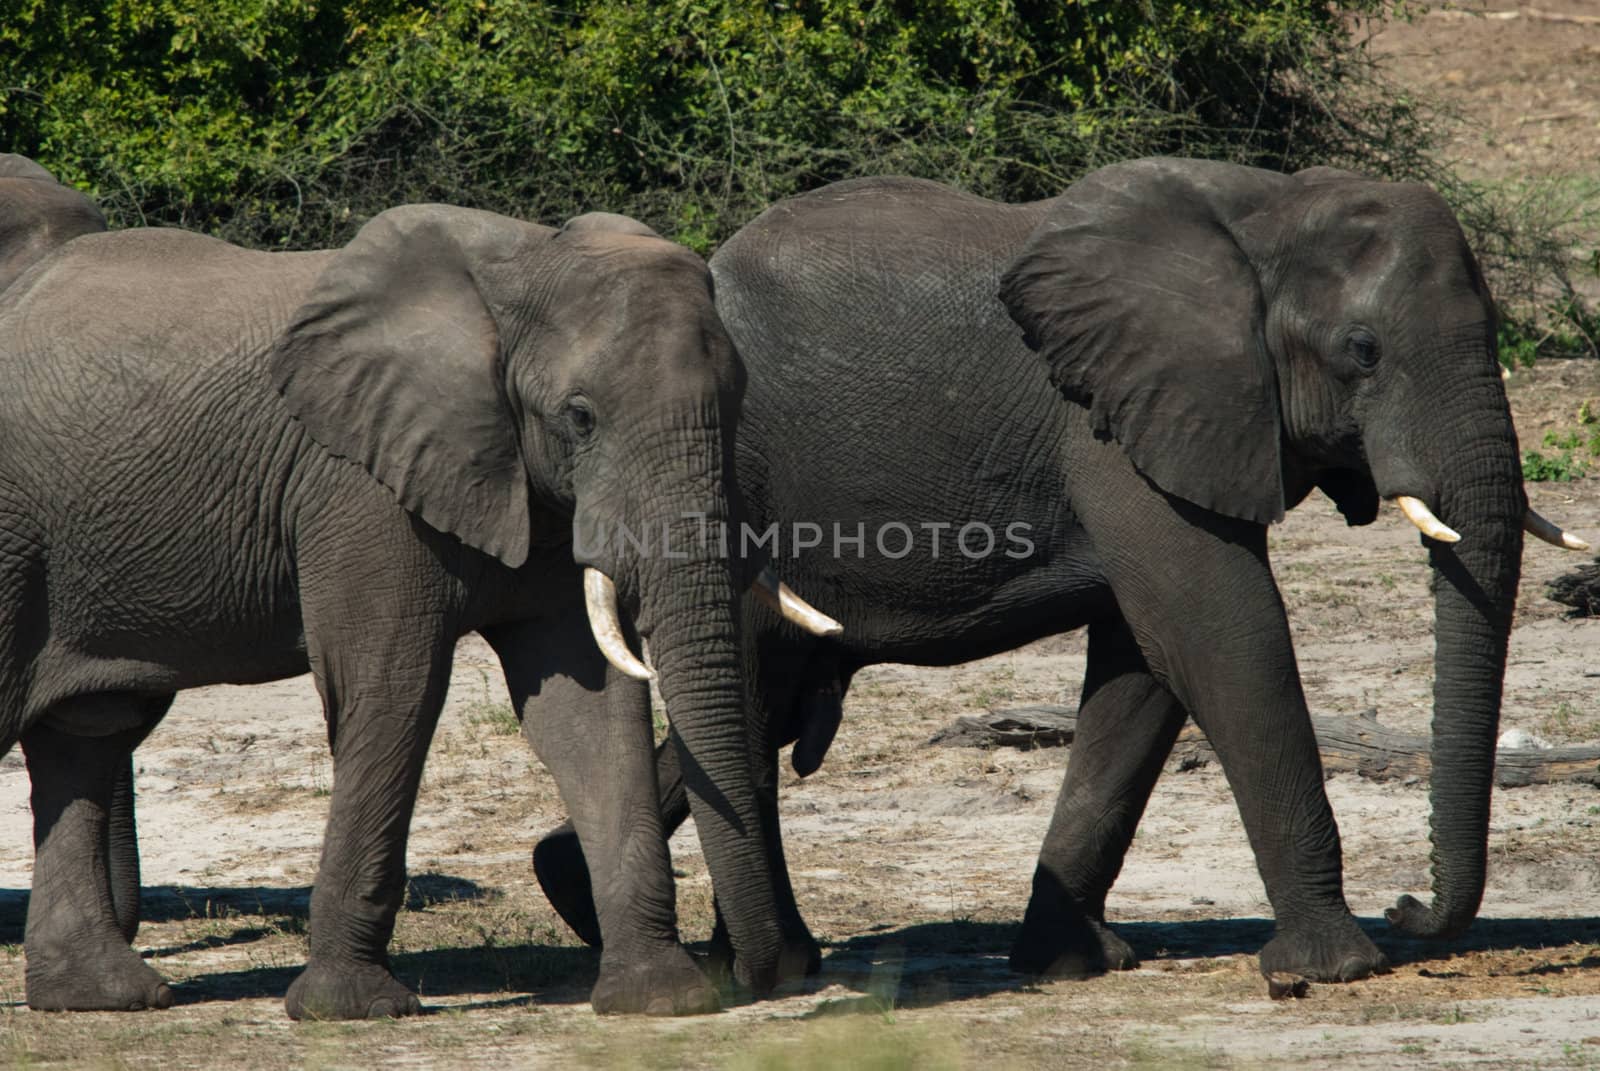 Two elephants by edan